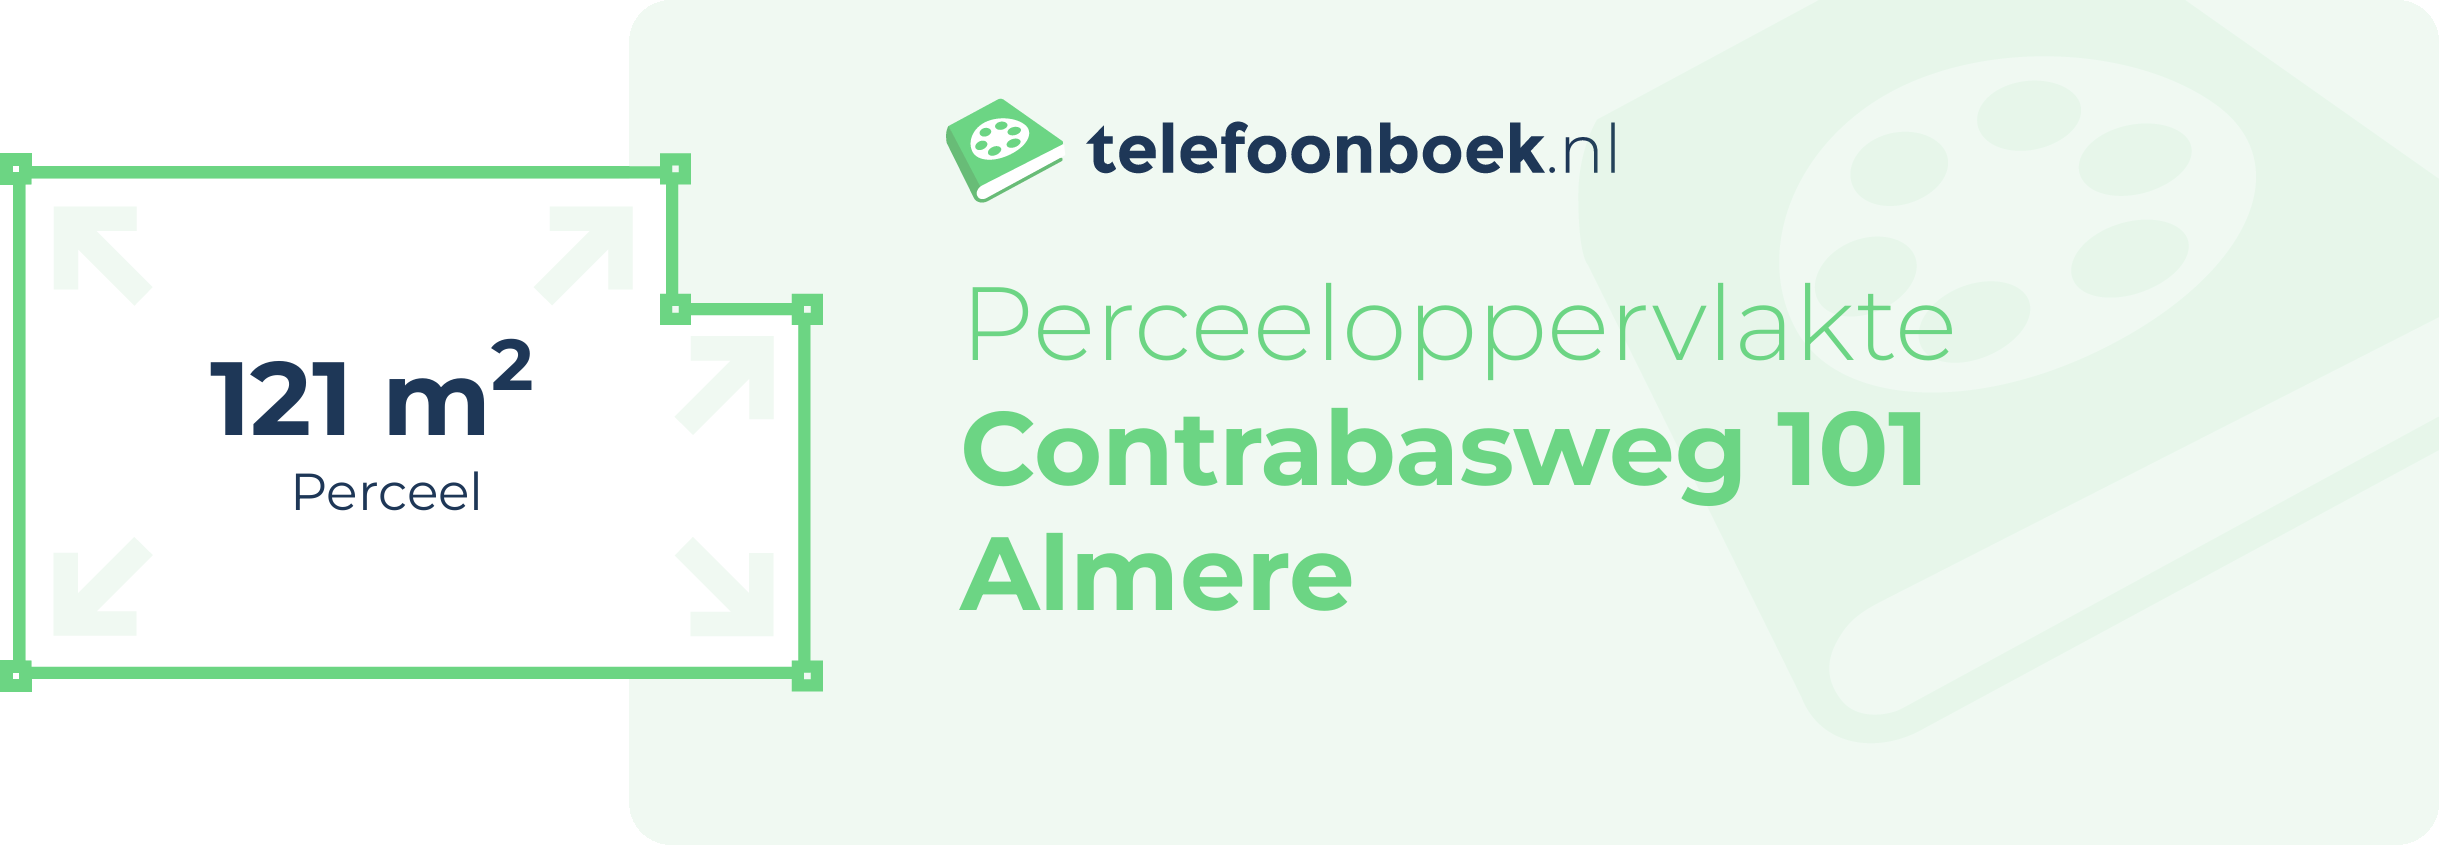 Perceeloppervlakte Contrabasweg 101 Almere